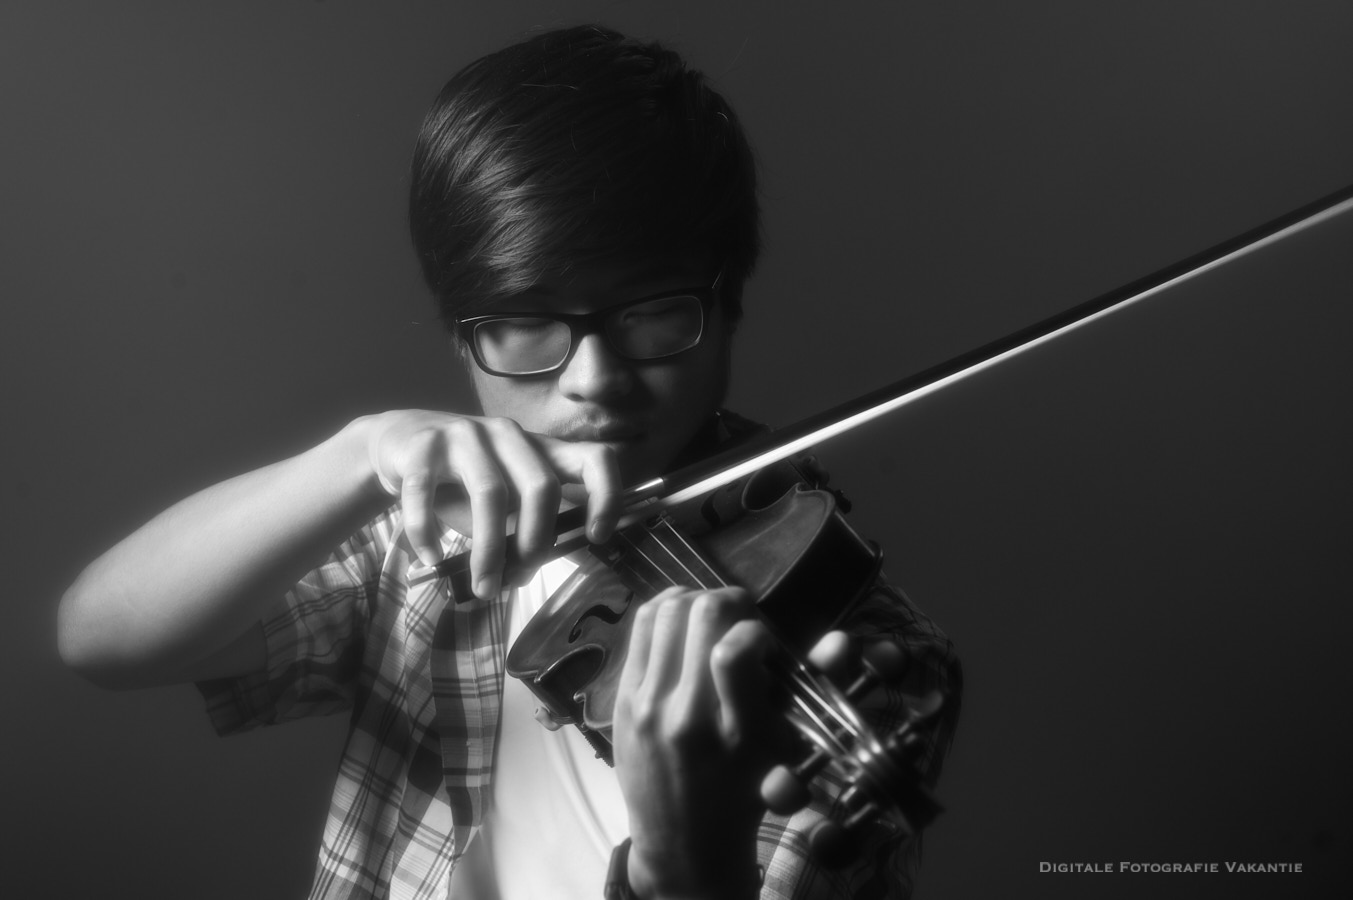 Mathijs violist playing